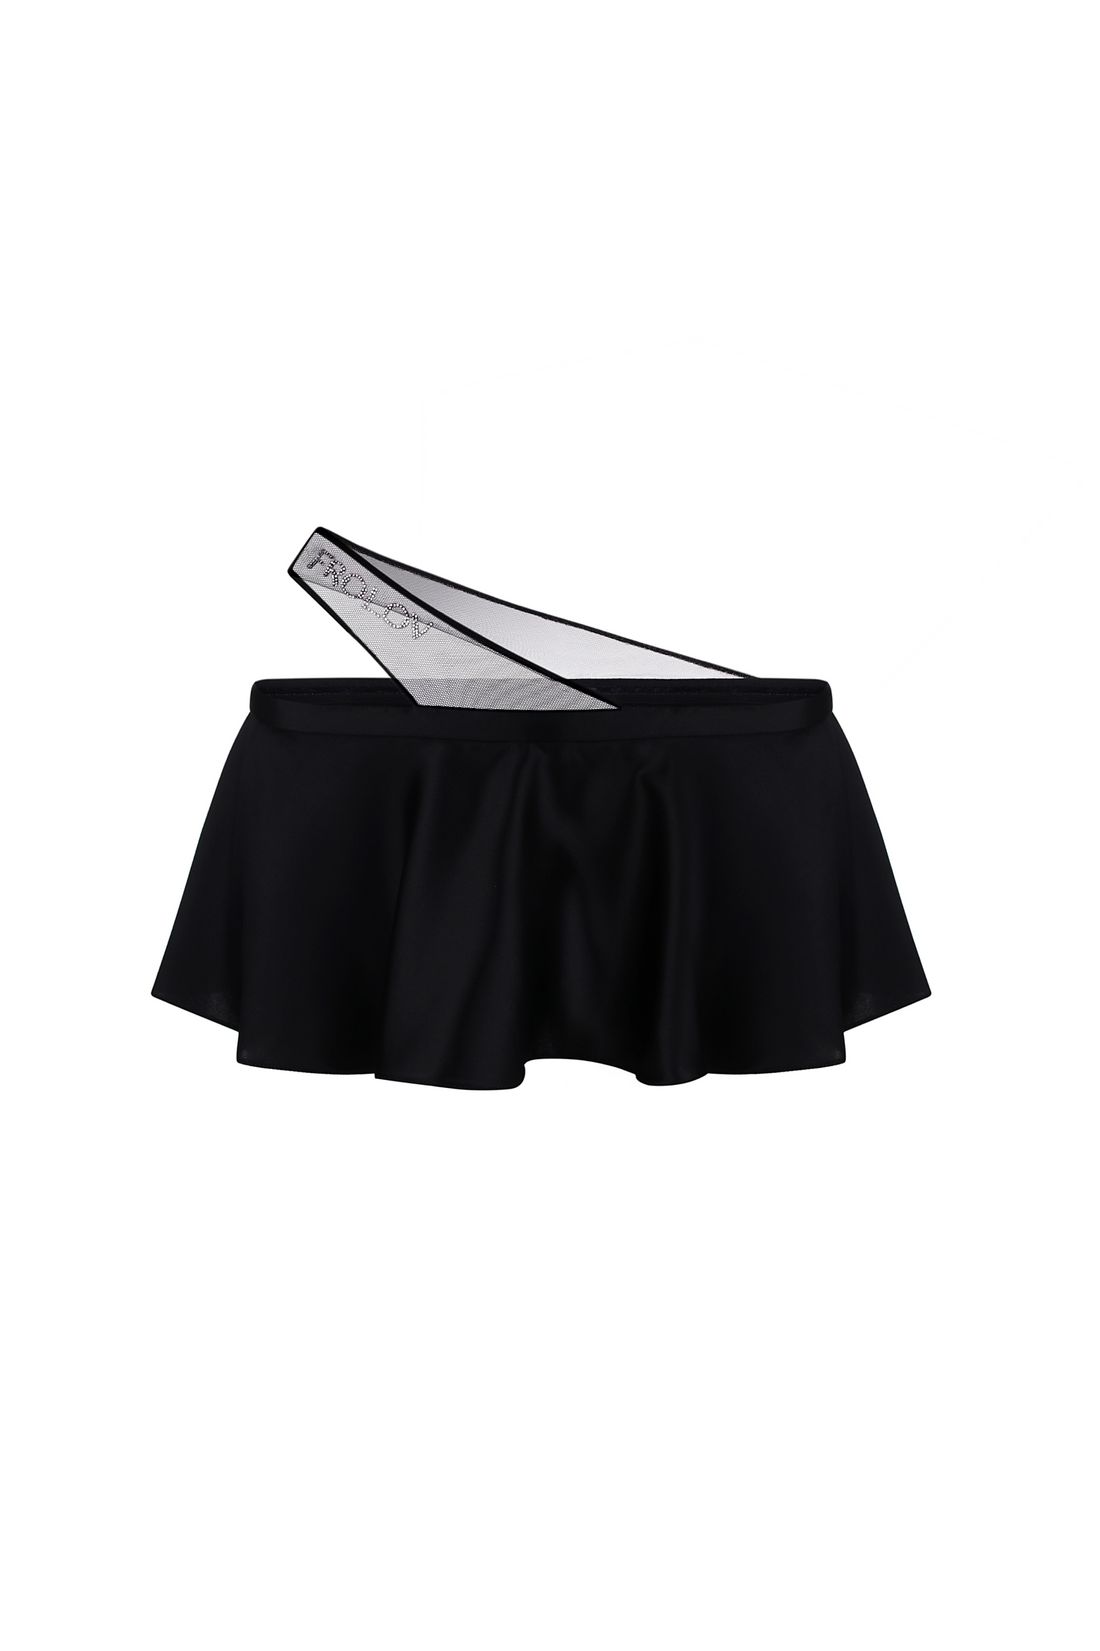 Silk micro skirt